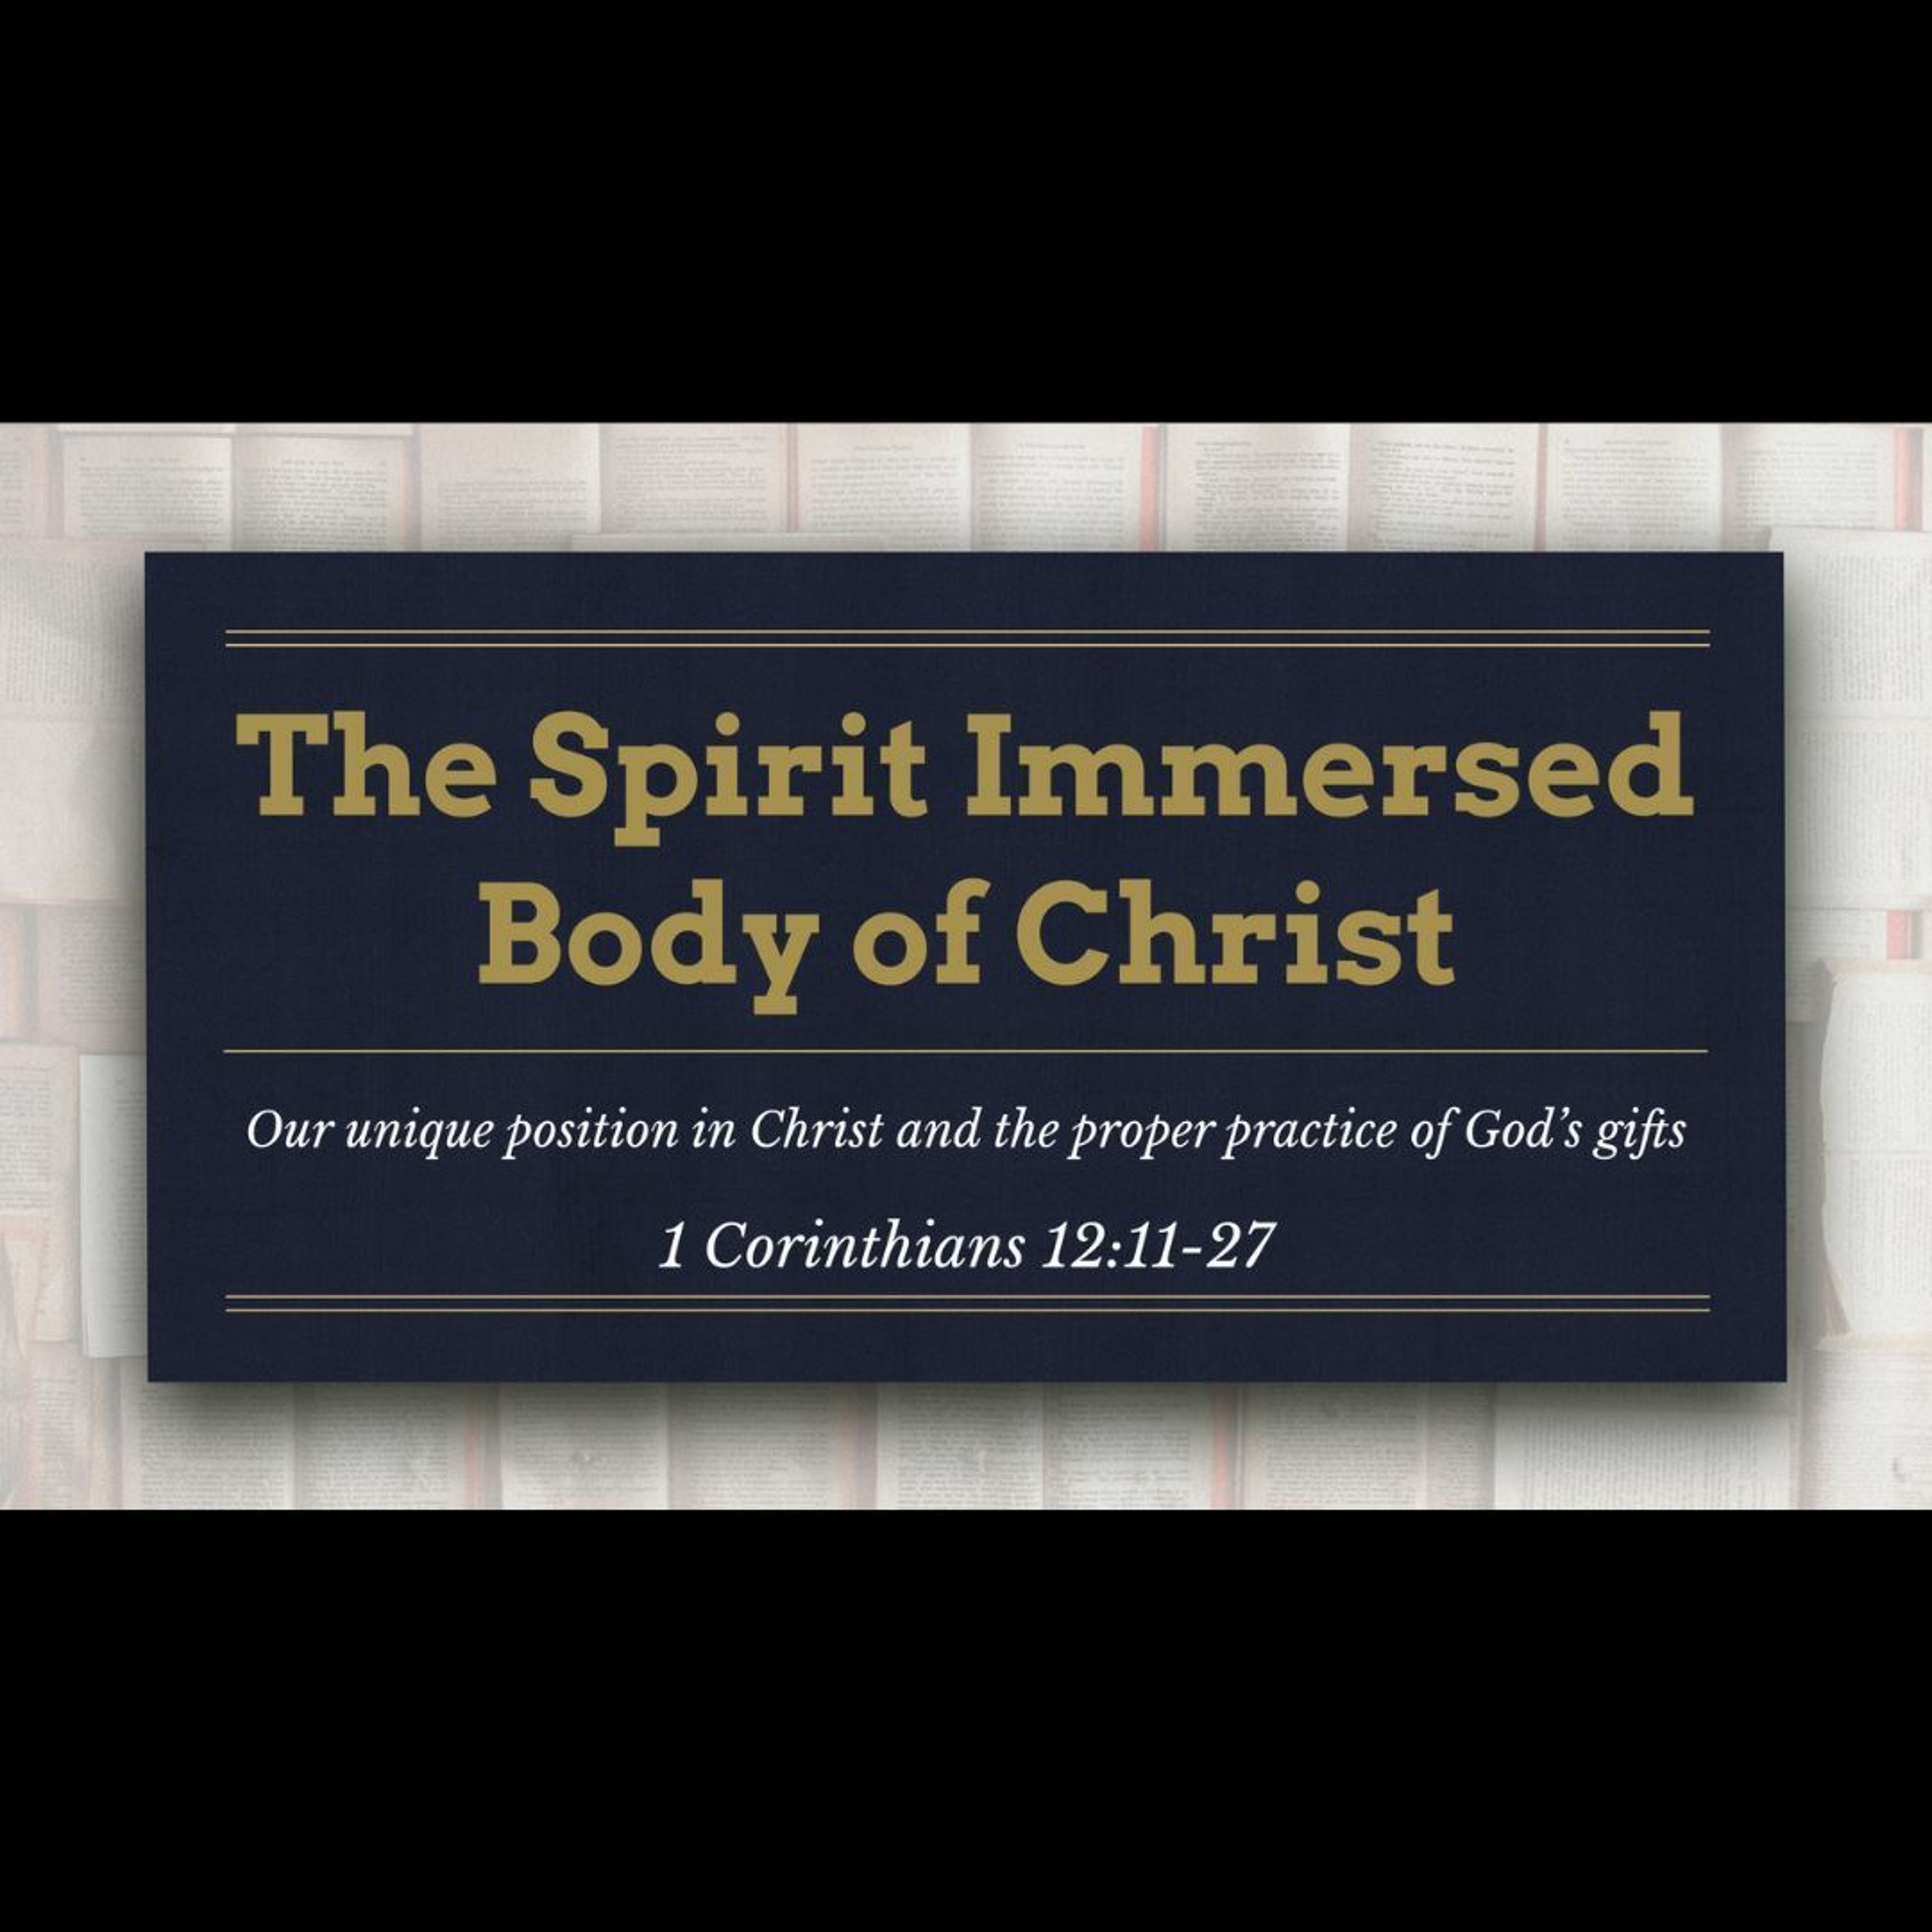 The Spirit Immersed Body of Christ (1 Corinthians 12:11-27)